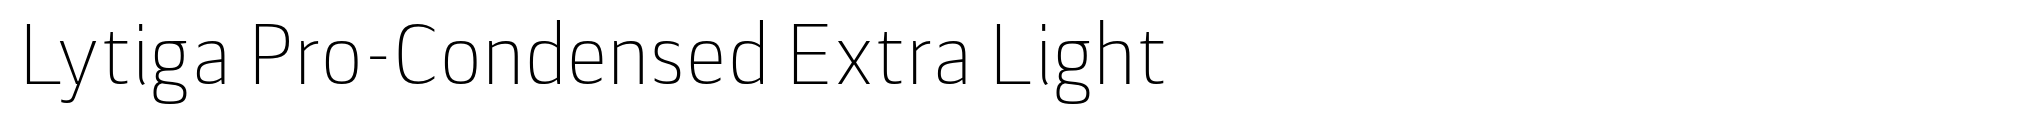 Lytiga Pro-Condensed Extra Light image